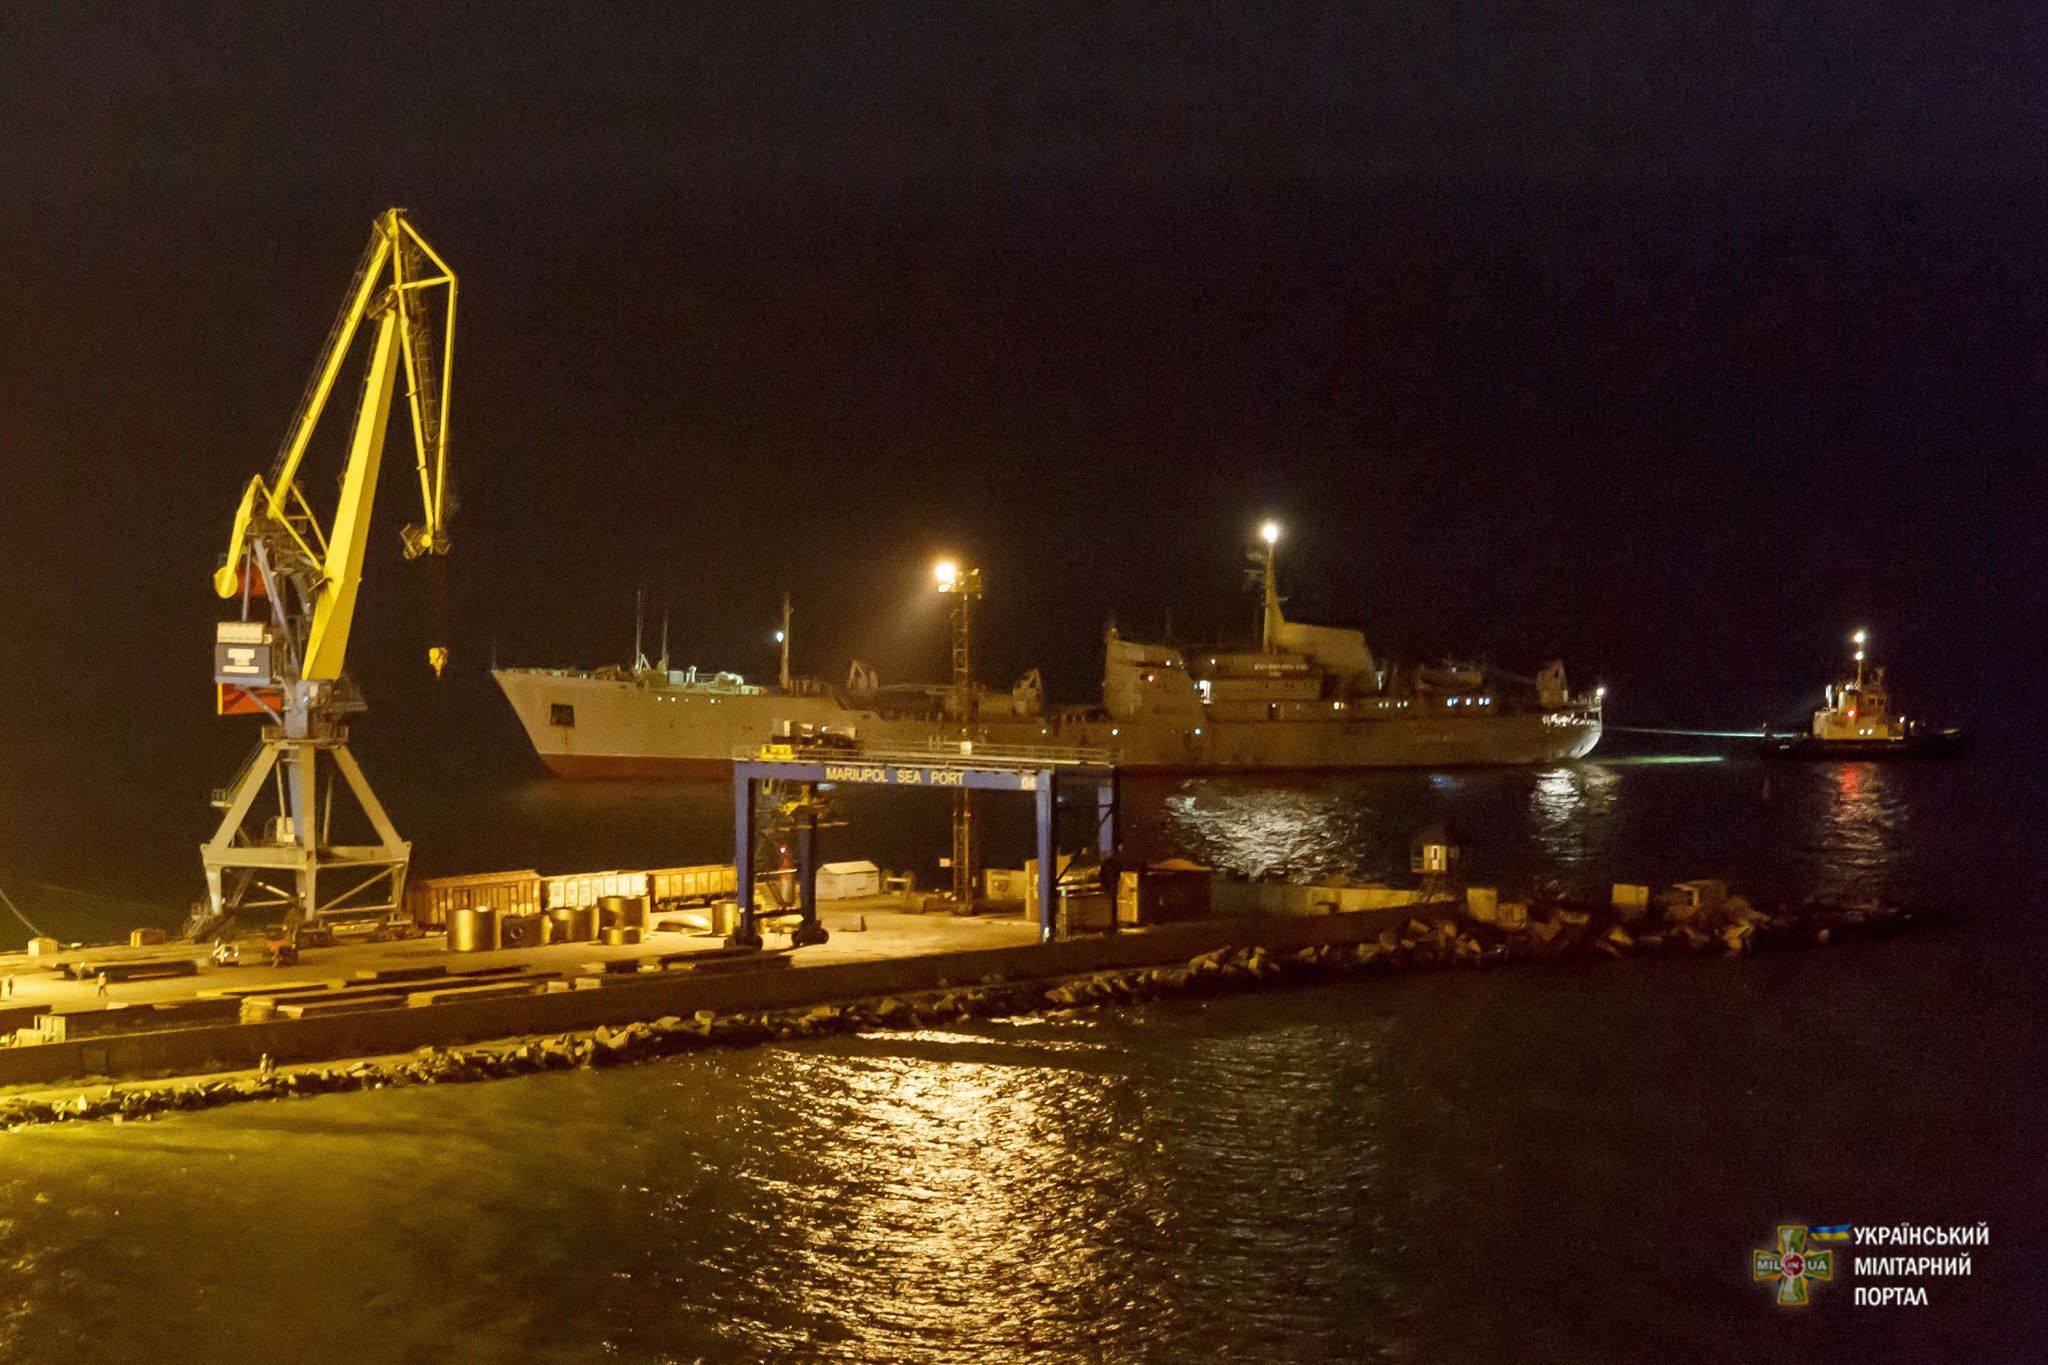 Ukrainian Navy’s “Donbas” ship in the port of Mariupol in the evening of 24 September. Photo: Ukrainian Military Portal ~